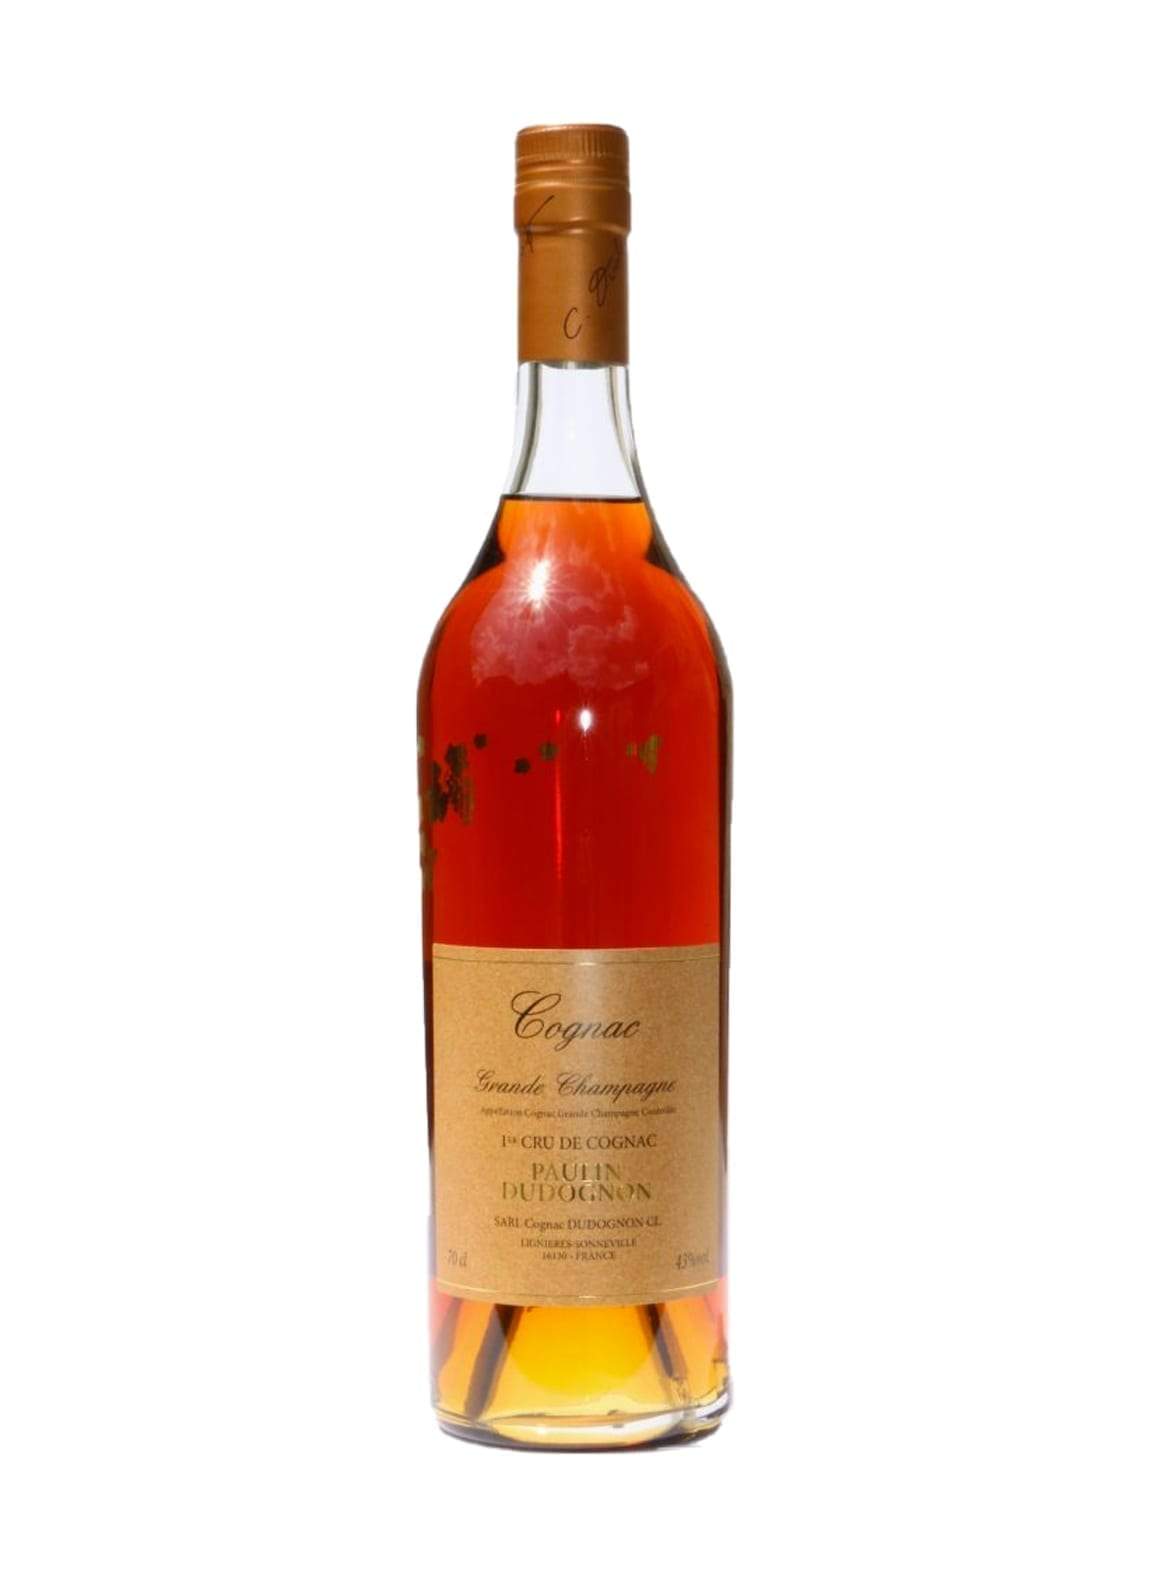 Dudognon Grand Champagne Cognac 60 years Paulin 43% 700ml | Brandy | Shop online at Spirits of France